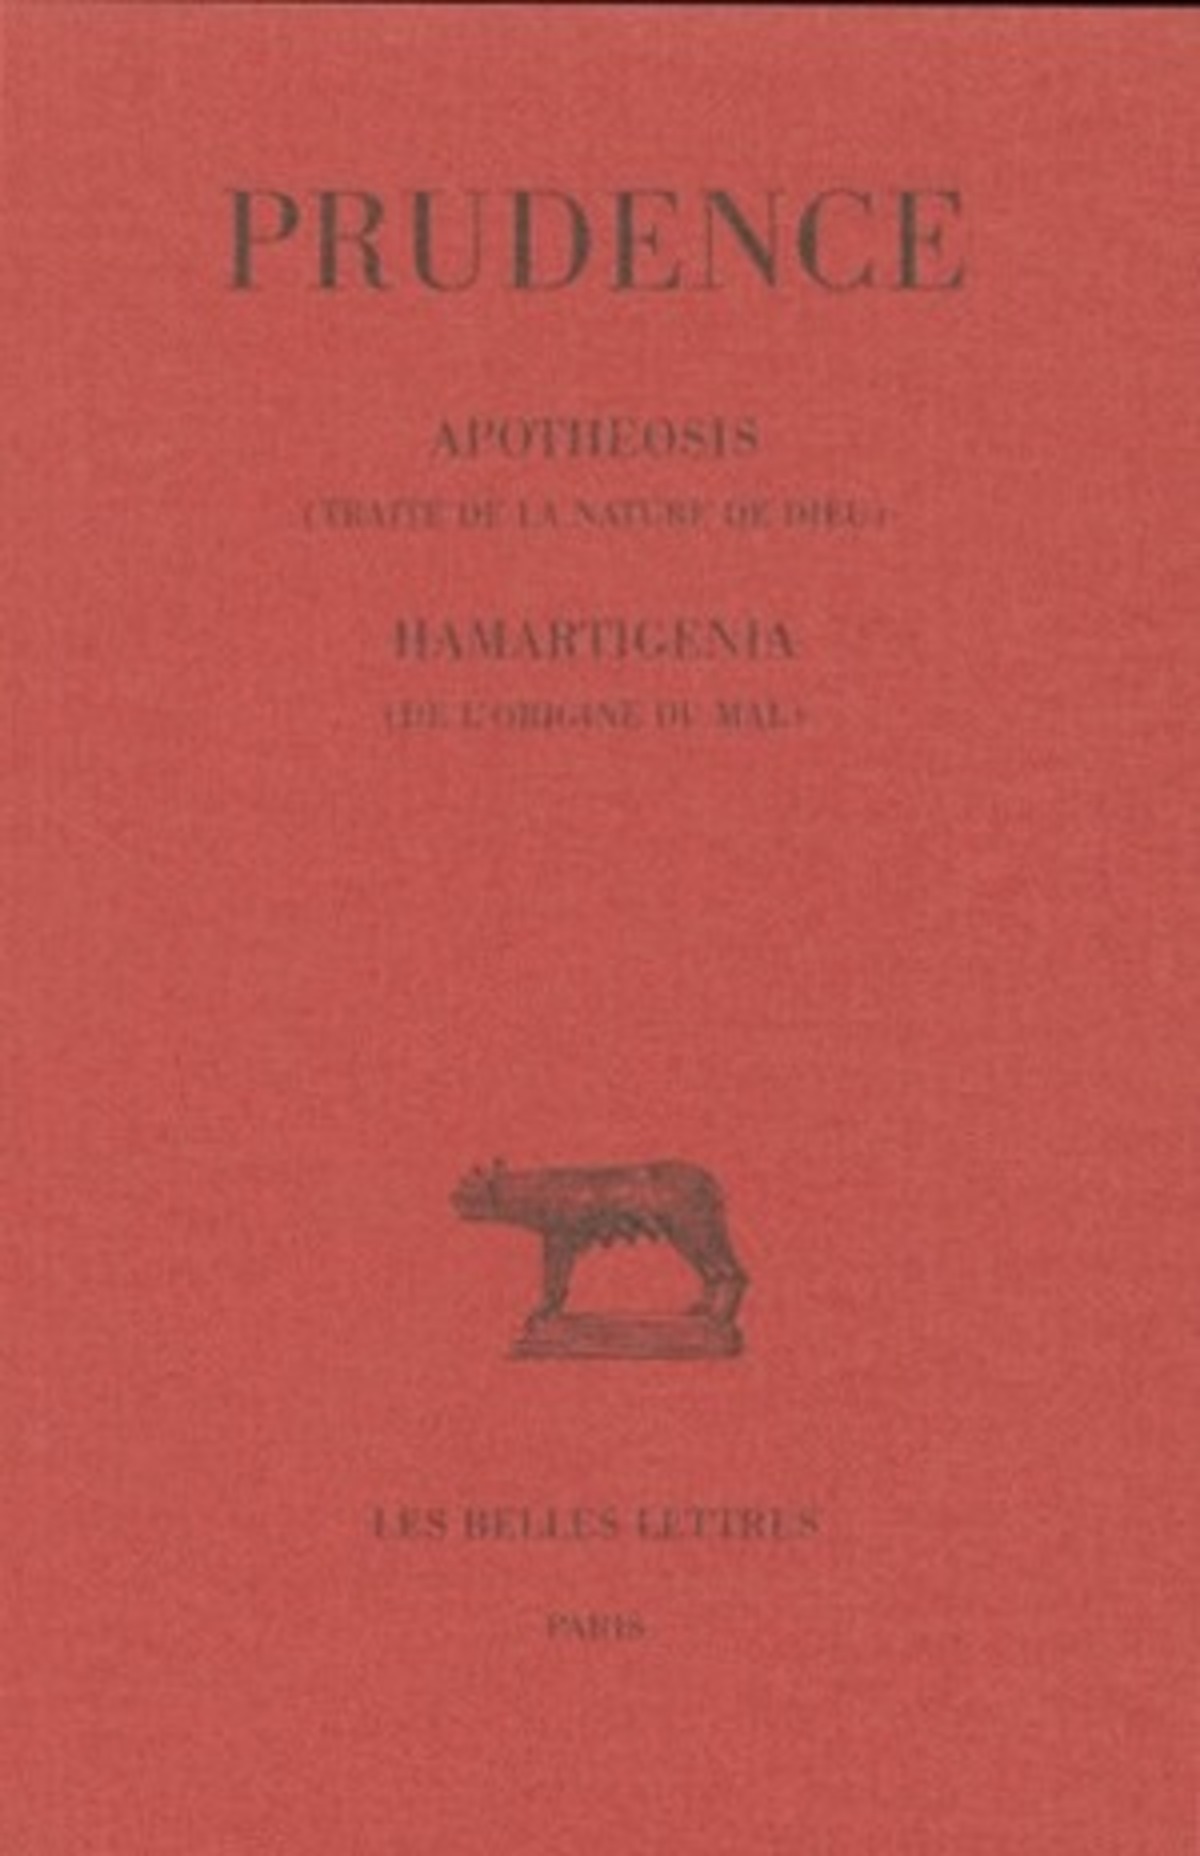 Tome II : Apotheosis (Traité de la nature de Dieu) - Hamartigenia (De l'origine du mal)